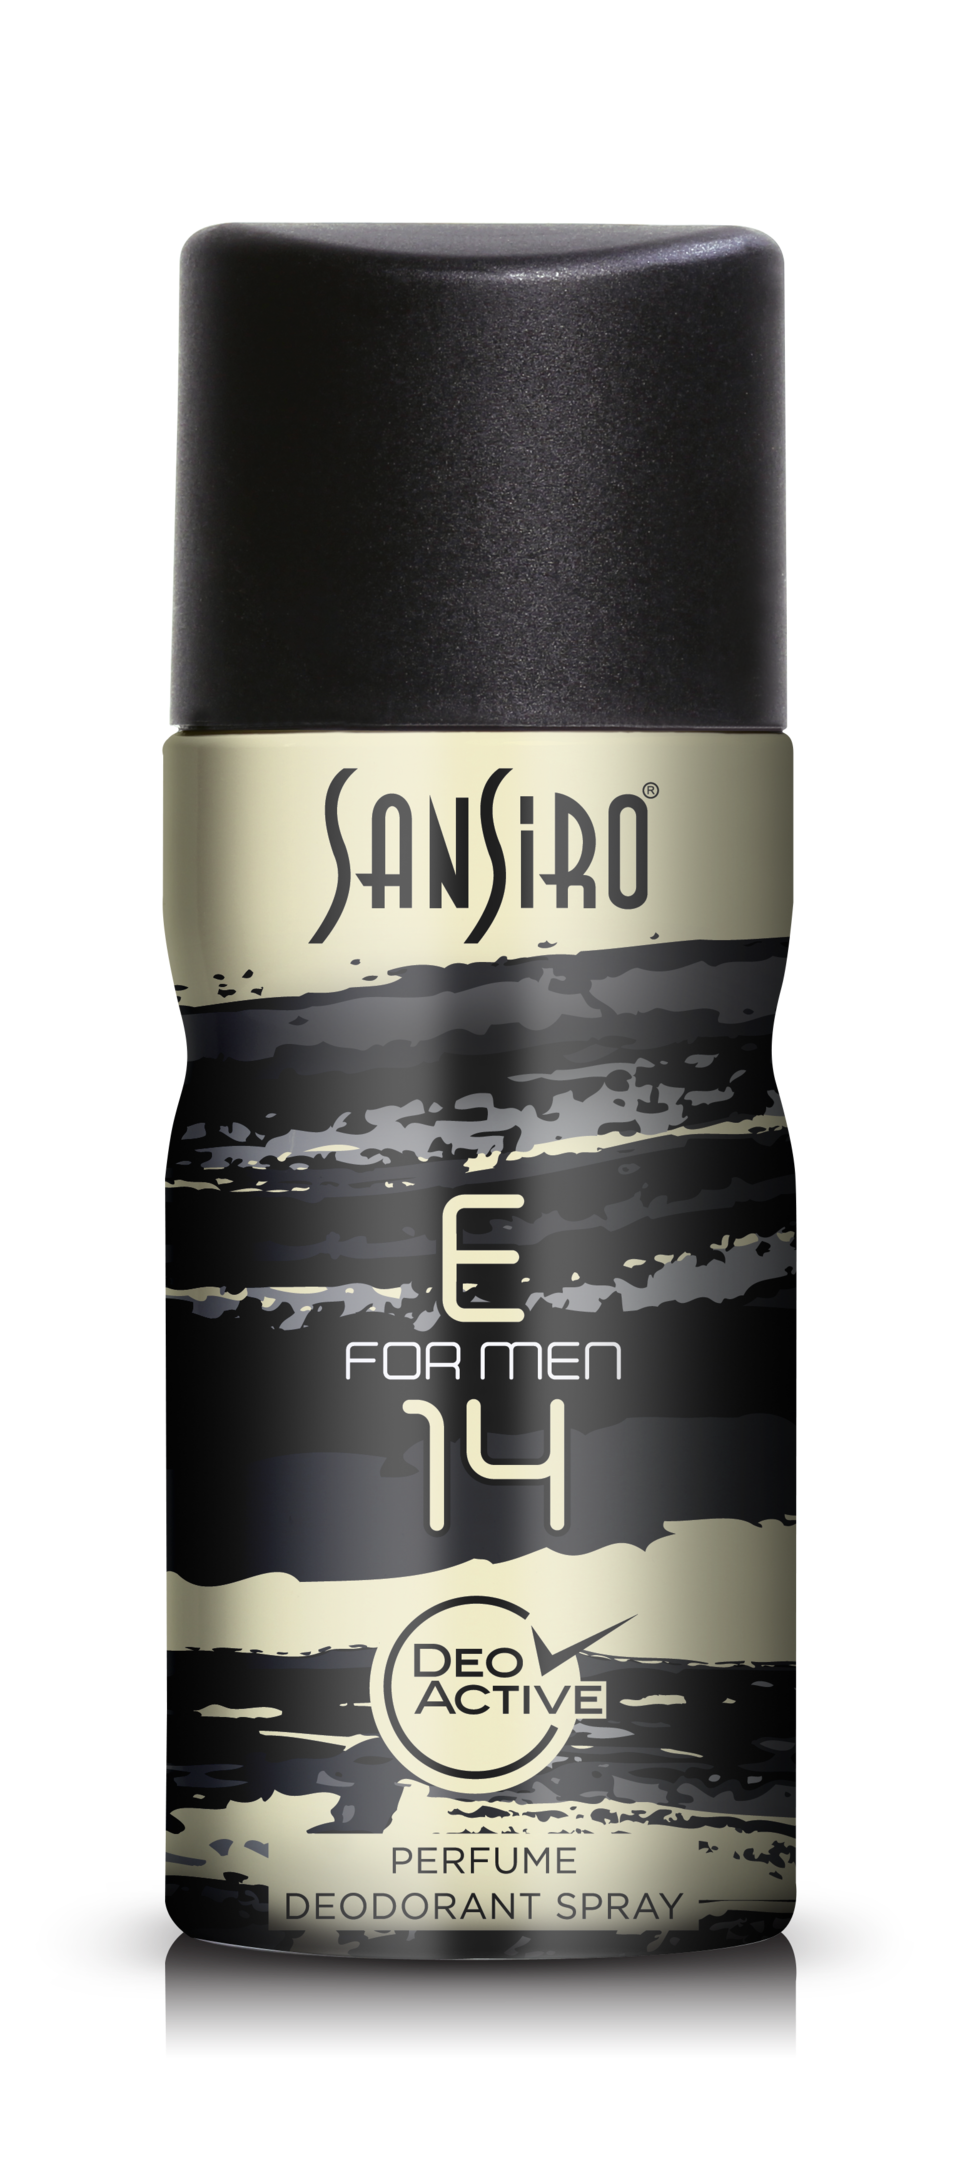 Sansiro Perfume - Deo For Men - Deodorant E14